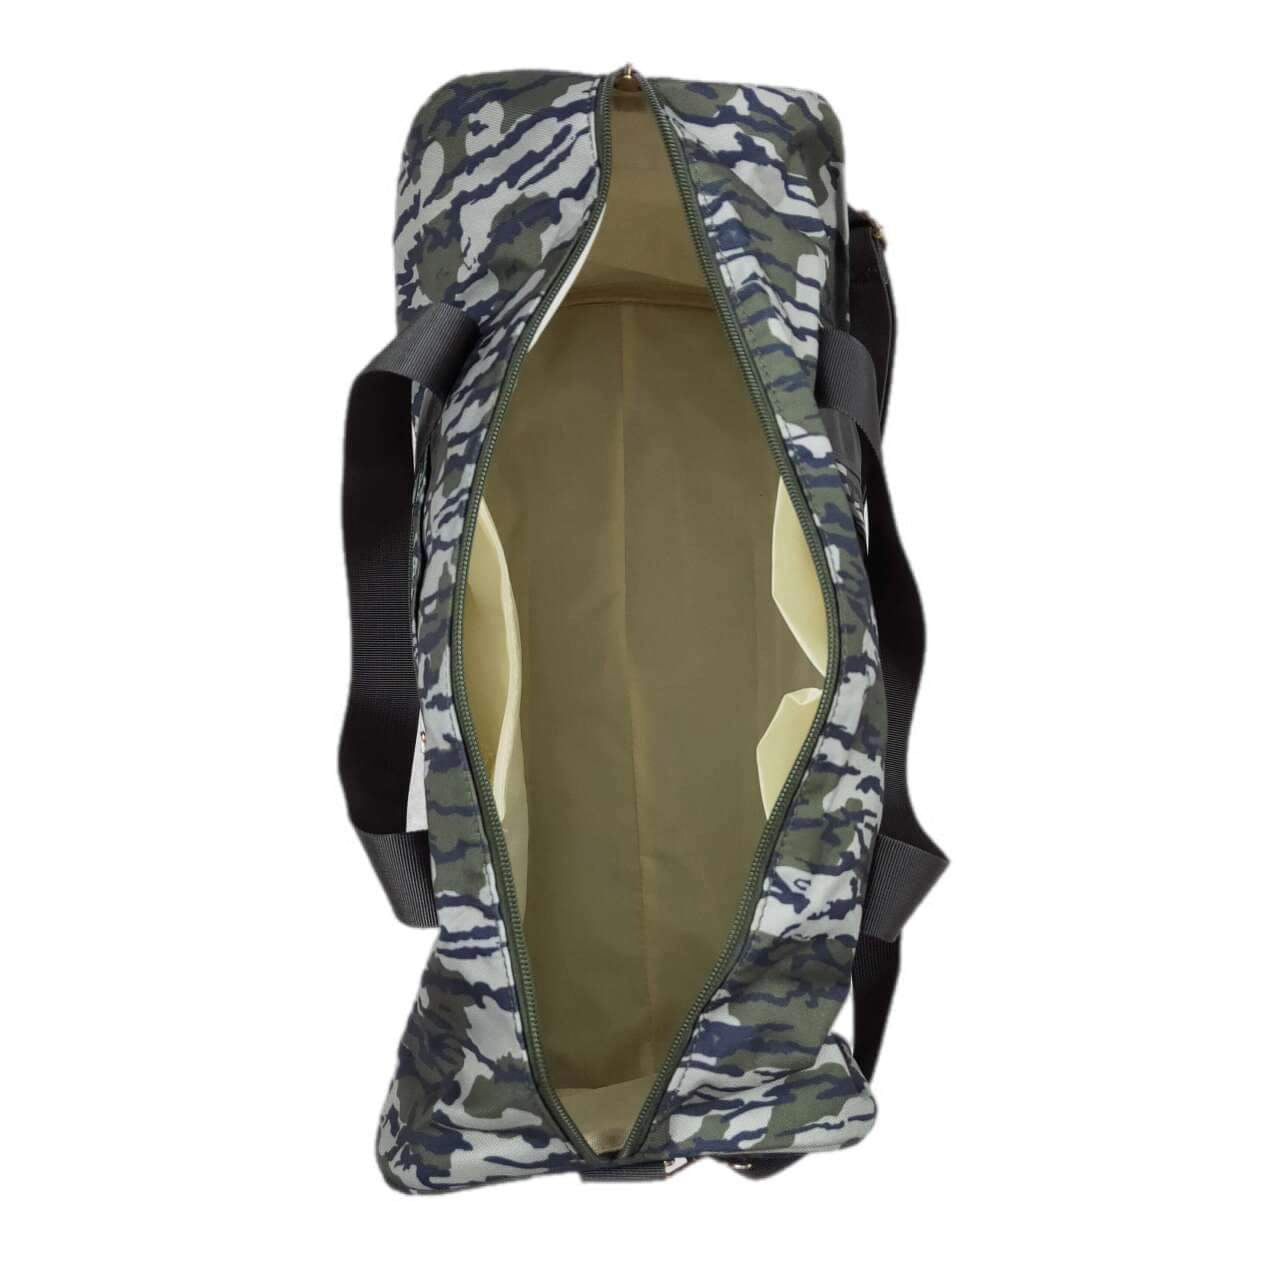 ᴡᴇᴇᴋʟʏ ᴘʀᴇ ᴏʀᴅᴇʀ Duffel Bag- Camo 18.5x11x8